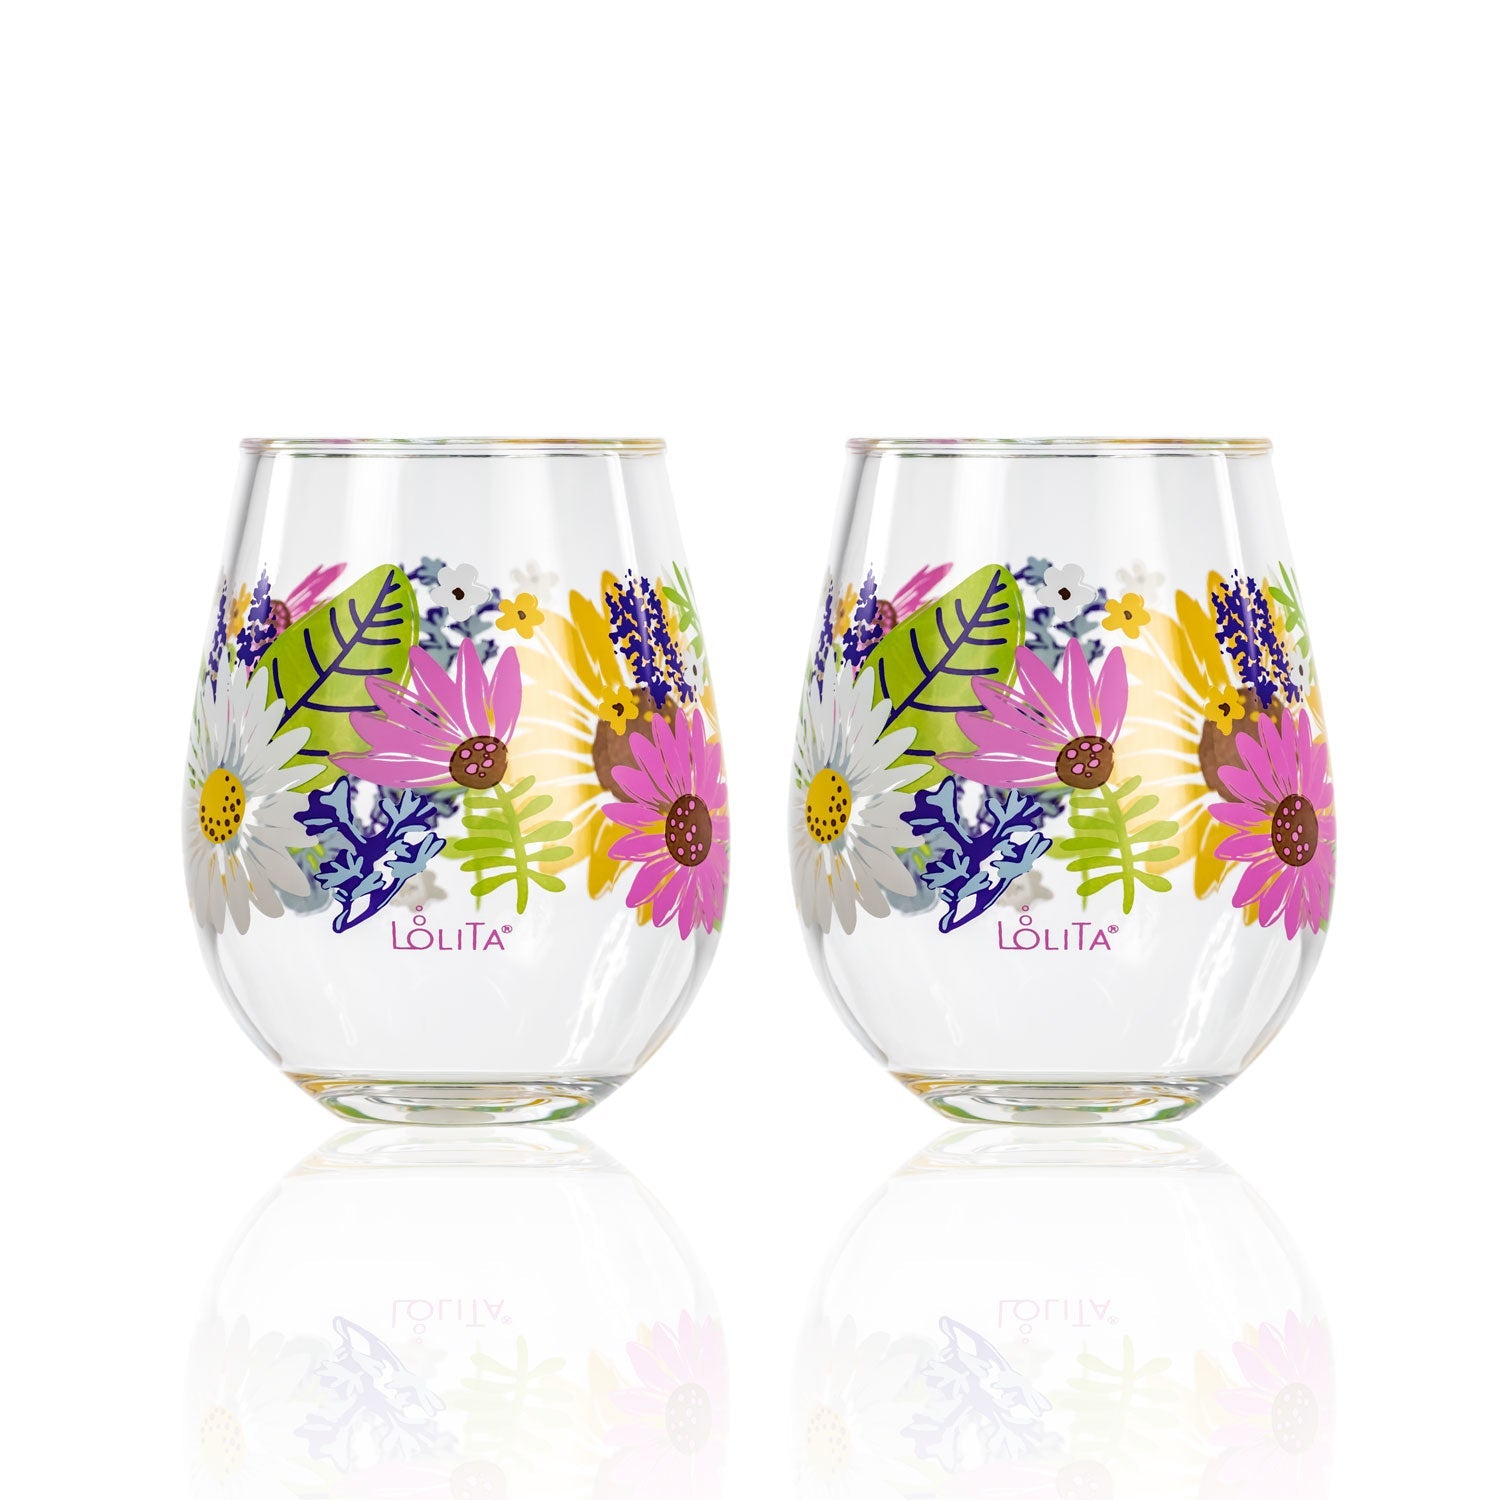 Lolita Wild Flower Party to go 15oz Acrylic Stemless Wine Glasses set of 2